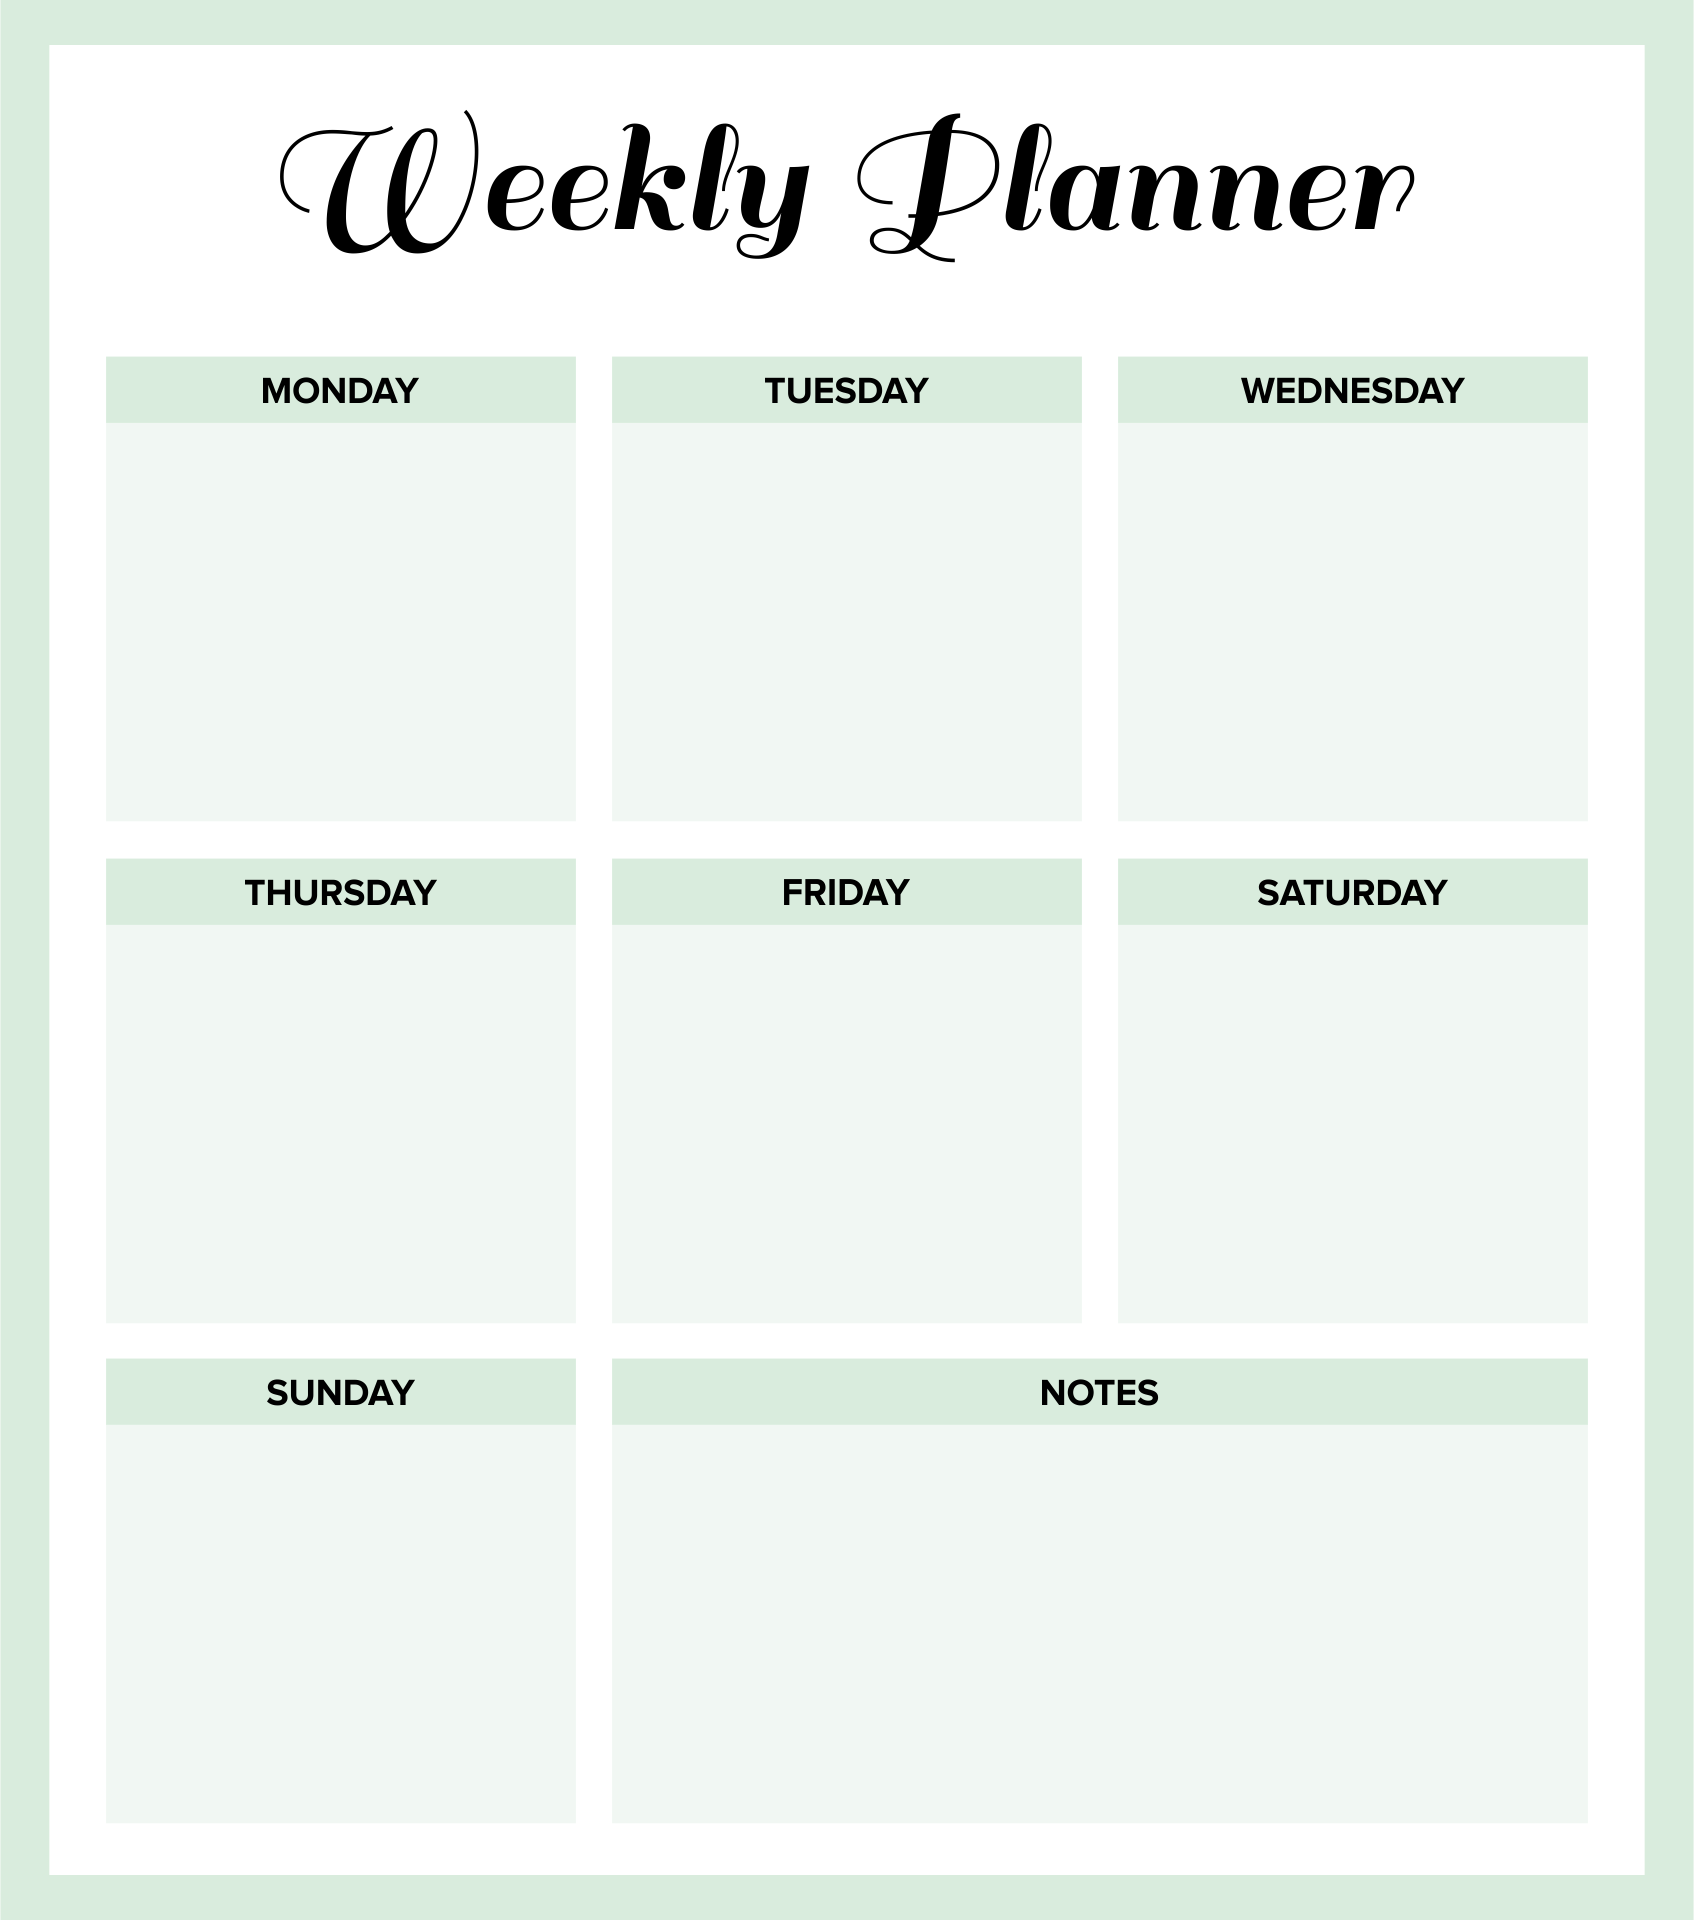 Weekly Planner Template Free